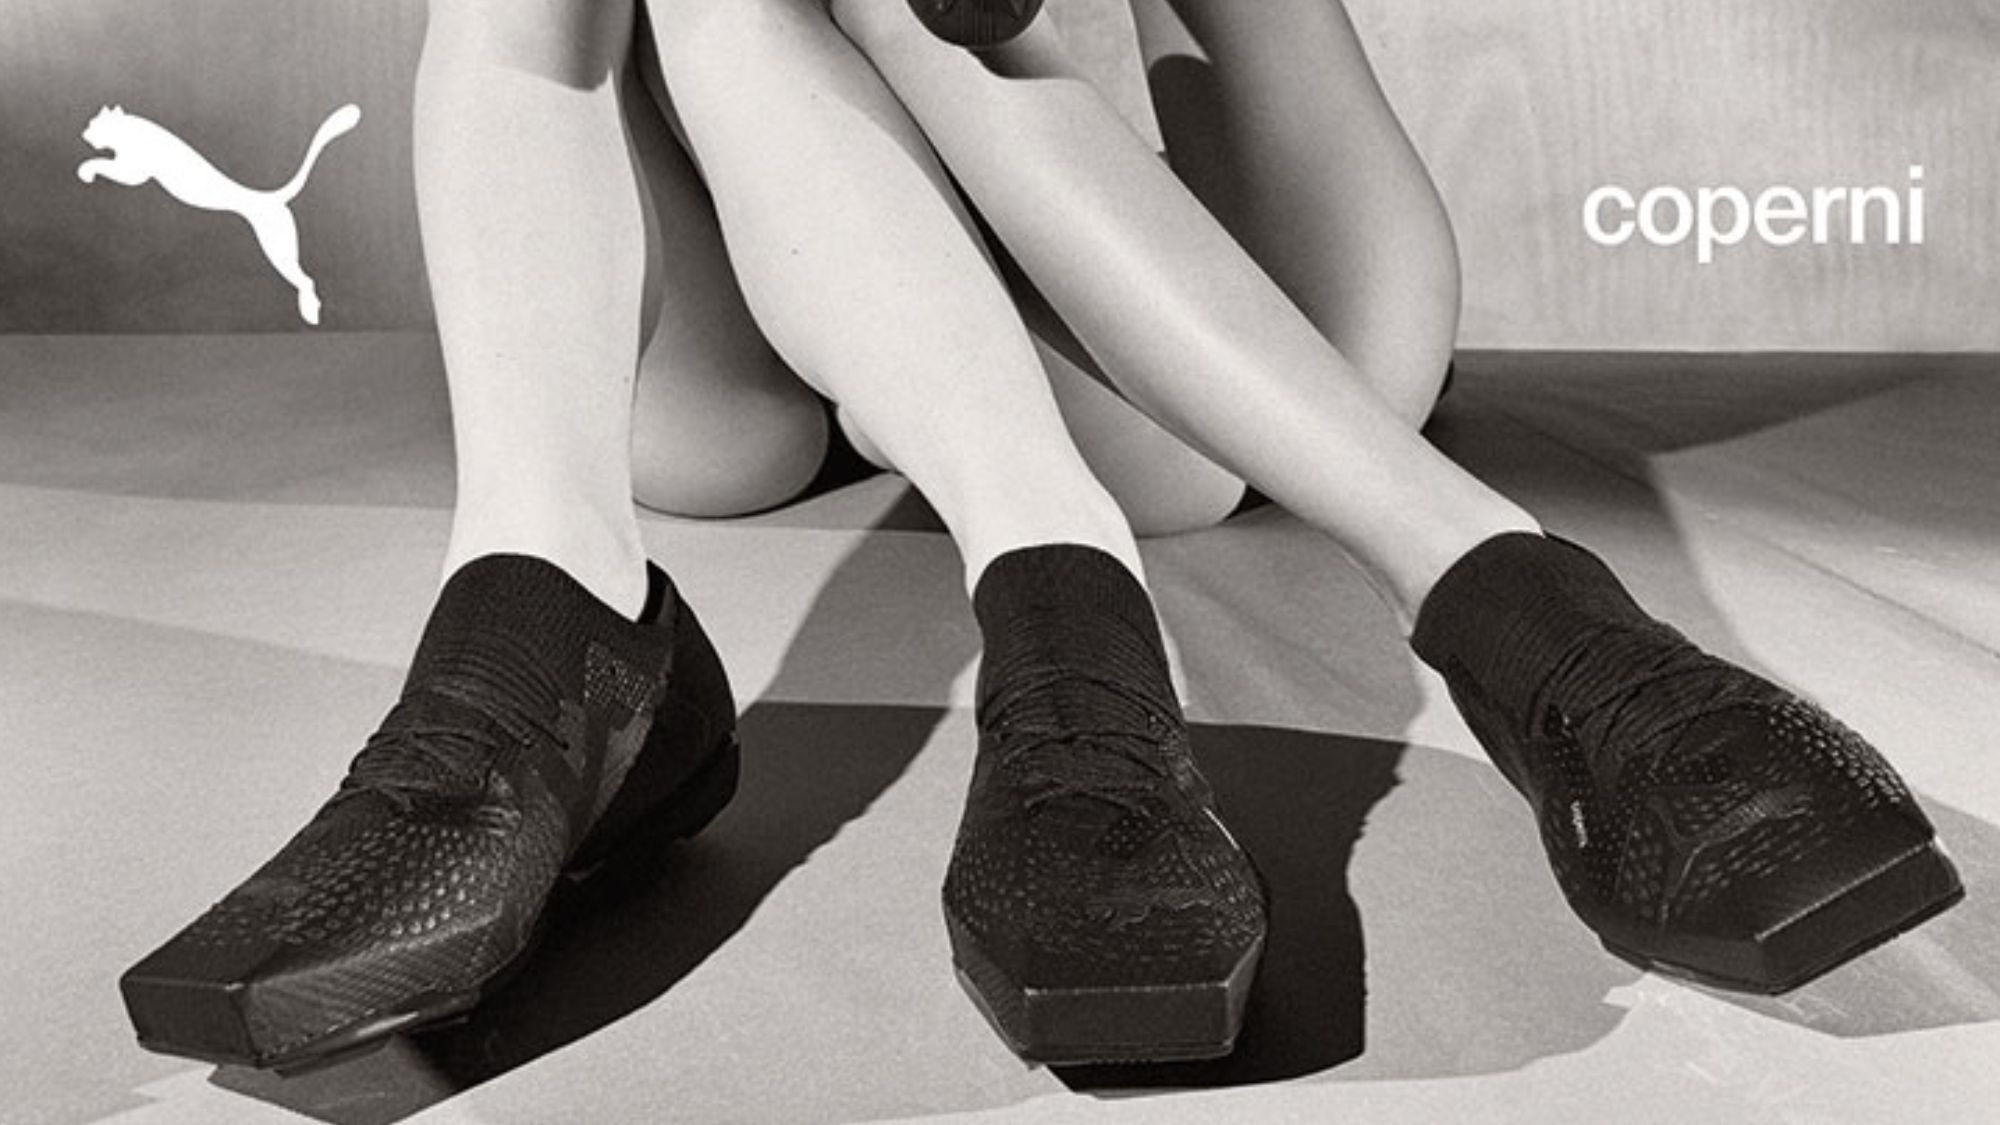 Coperni and Puma come together on the industry's latest avant-garde footwear. Photo: Coperni